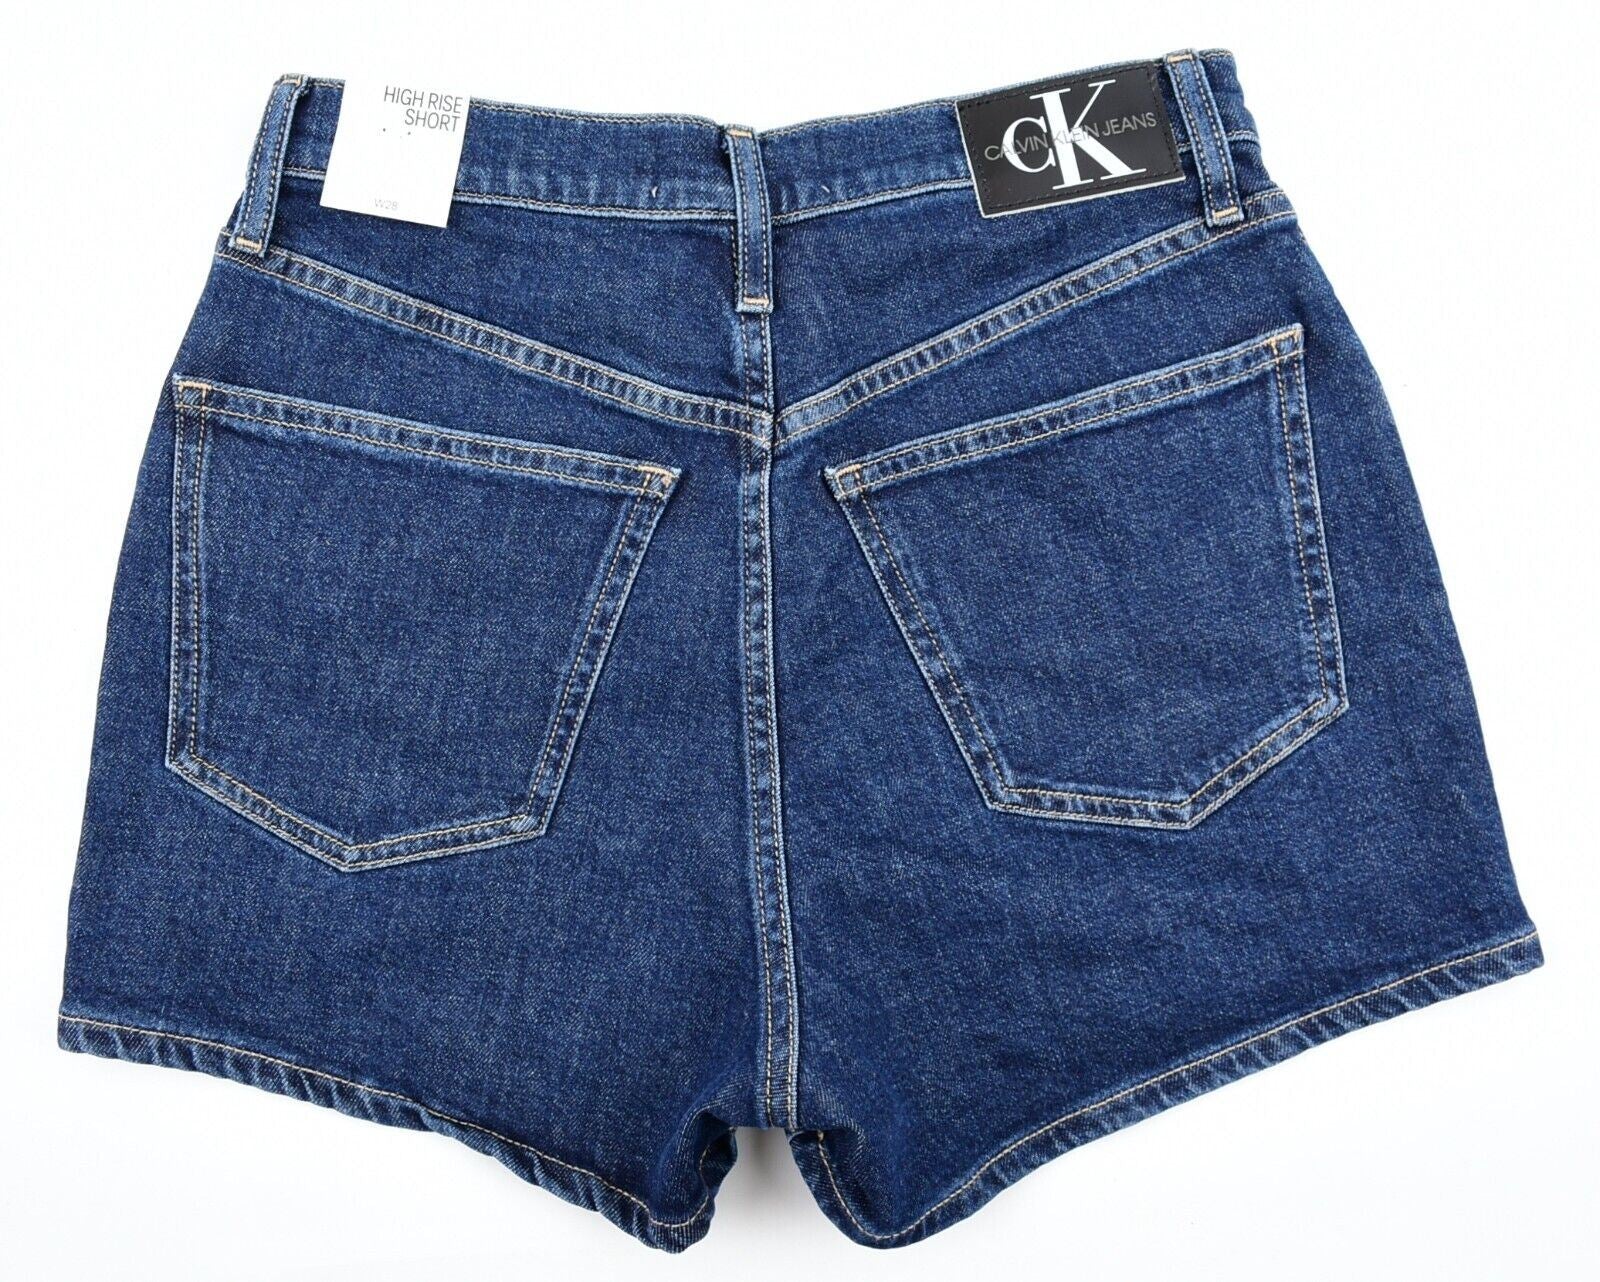 CALVIN KLEIN JEANS Womens High Waist Denim Shorts, Blue, size W28